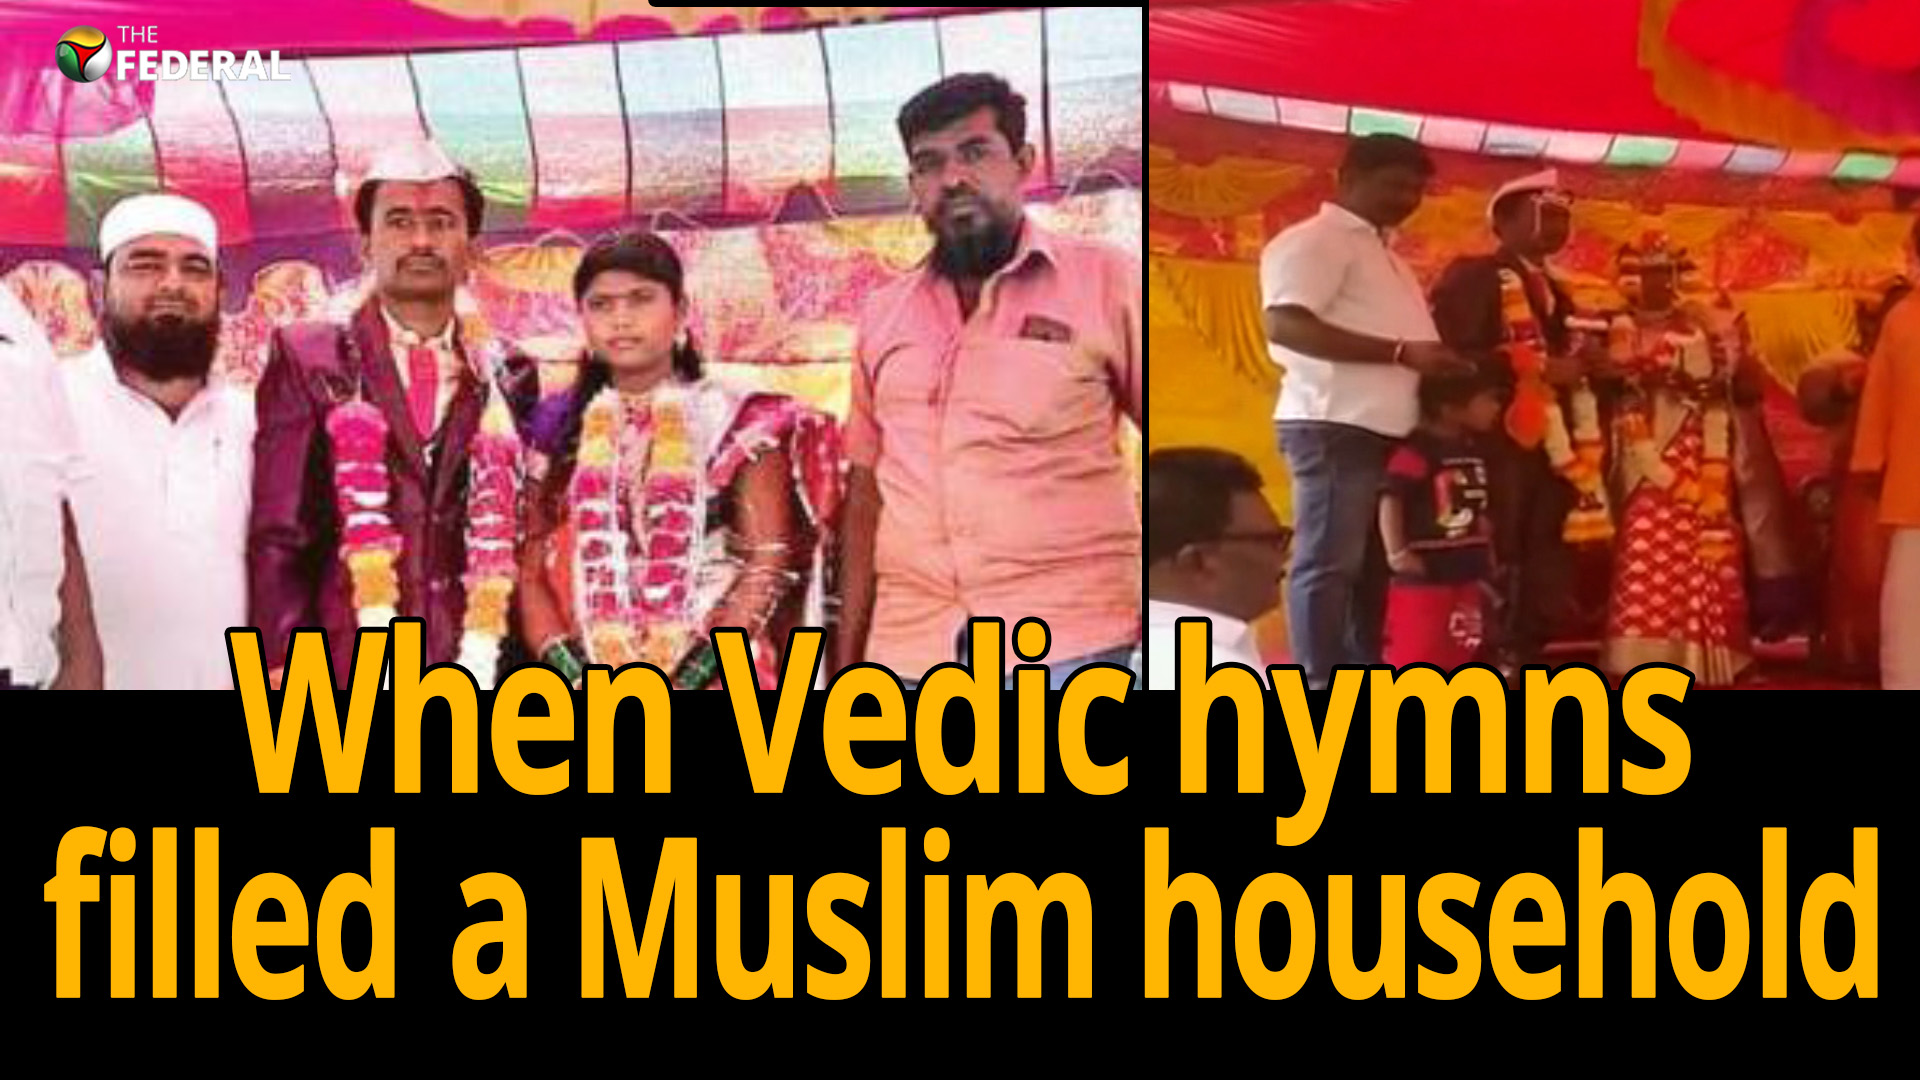 Muslim man marries off foster daughter as per Hindu customs